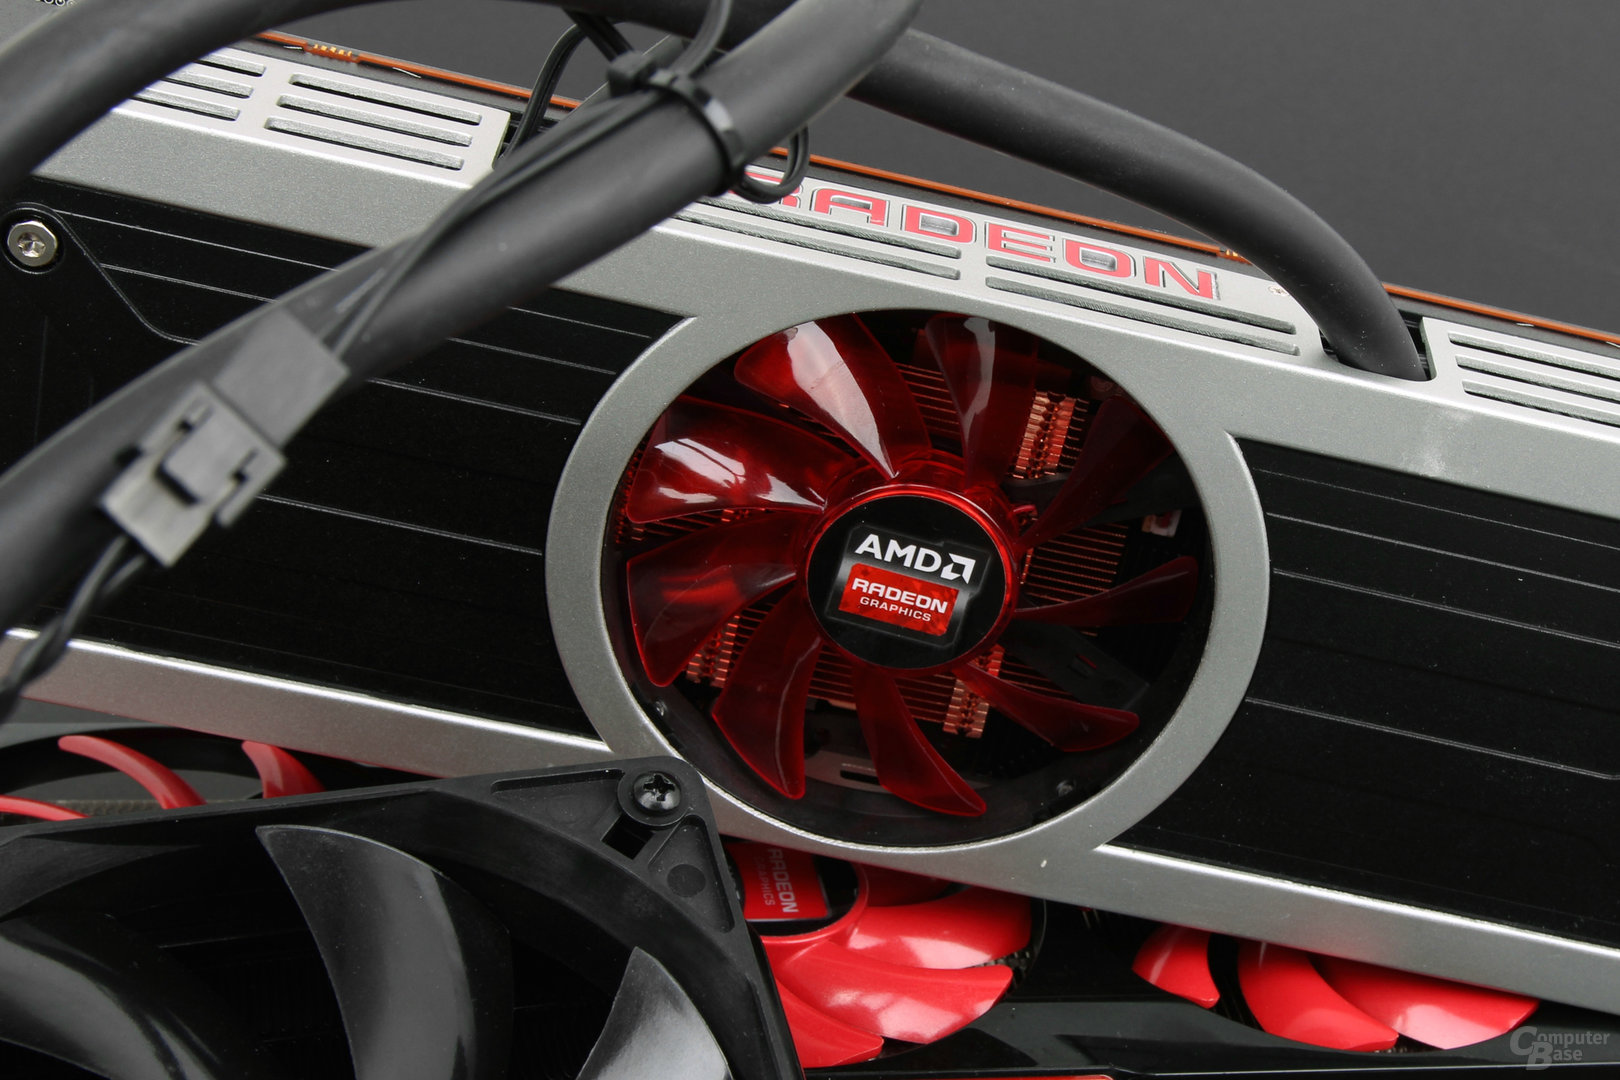 AMD Radeon R9 295X2 – Teaser